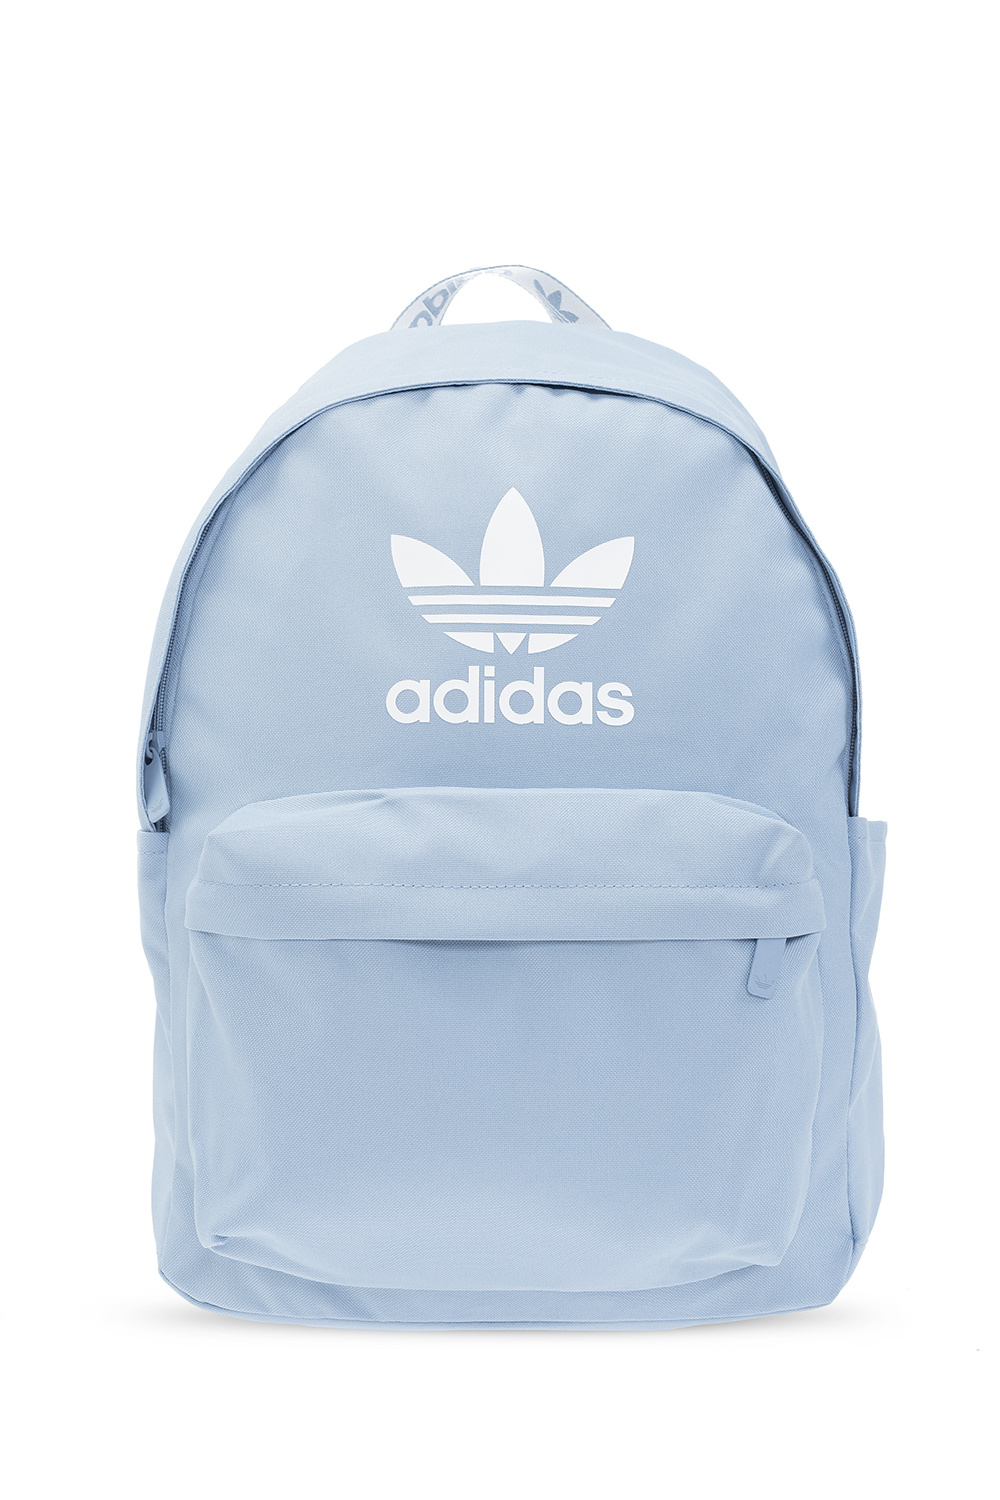 Adidas Yellow School Bag / Travel Backpack (1205#) – Kids Care